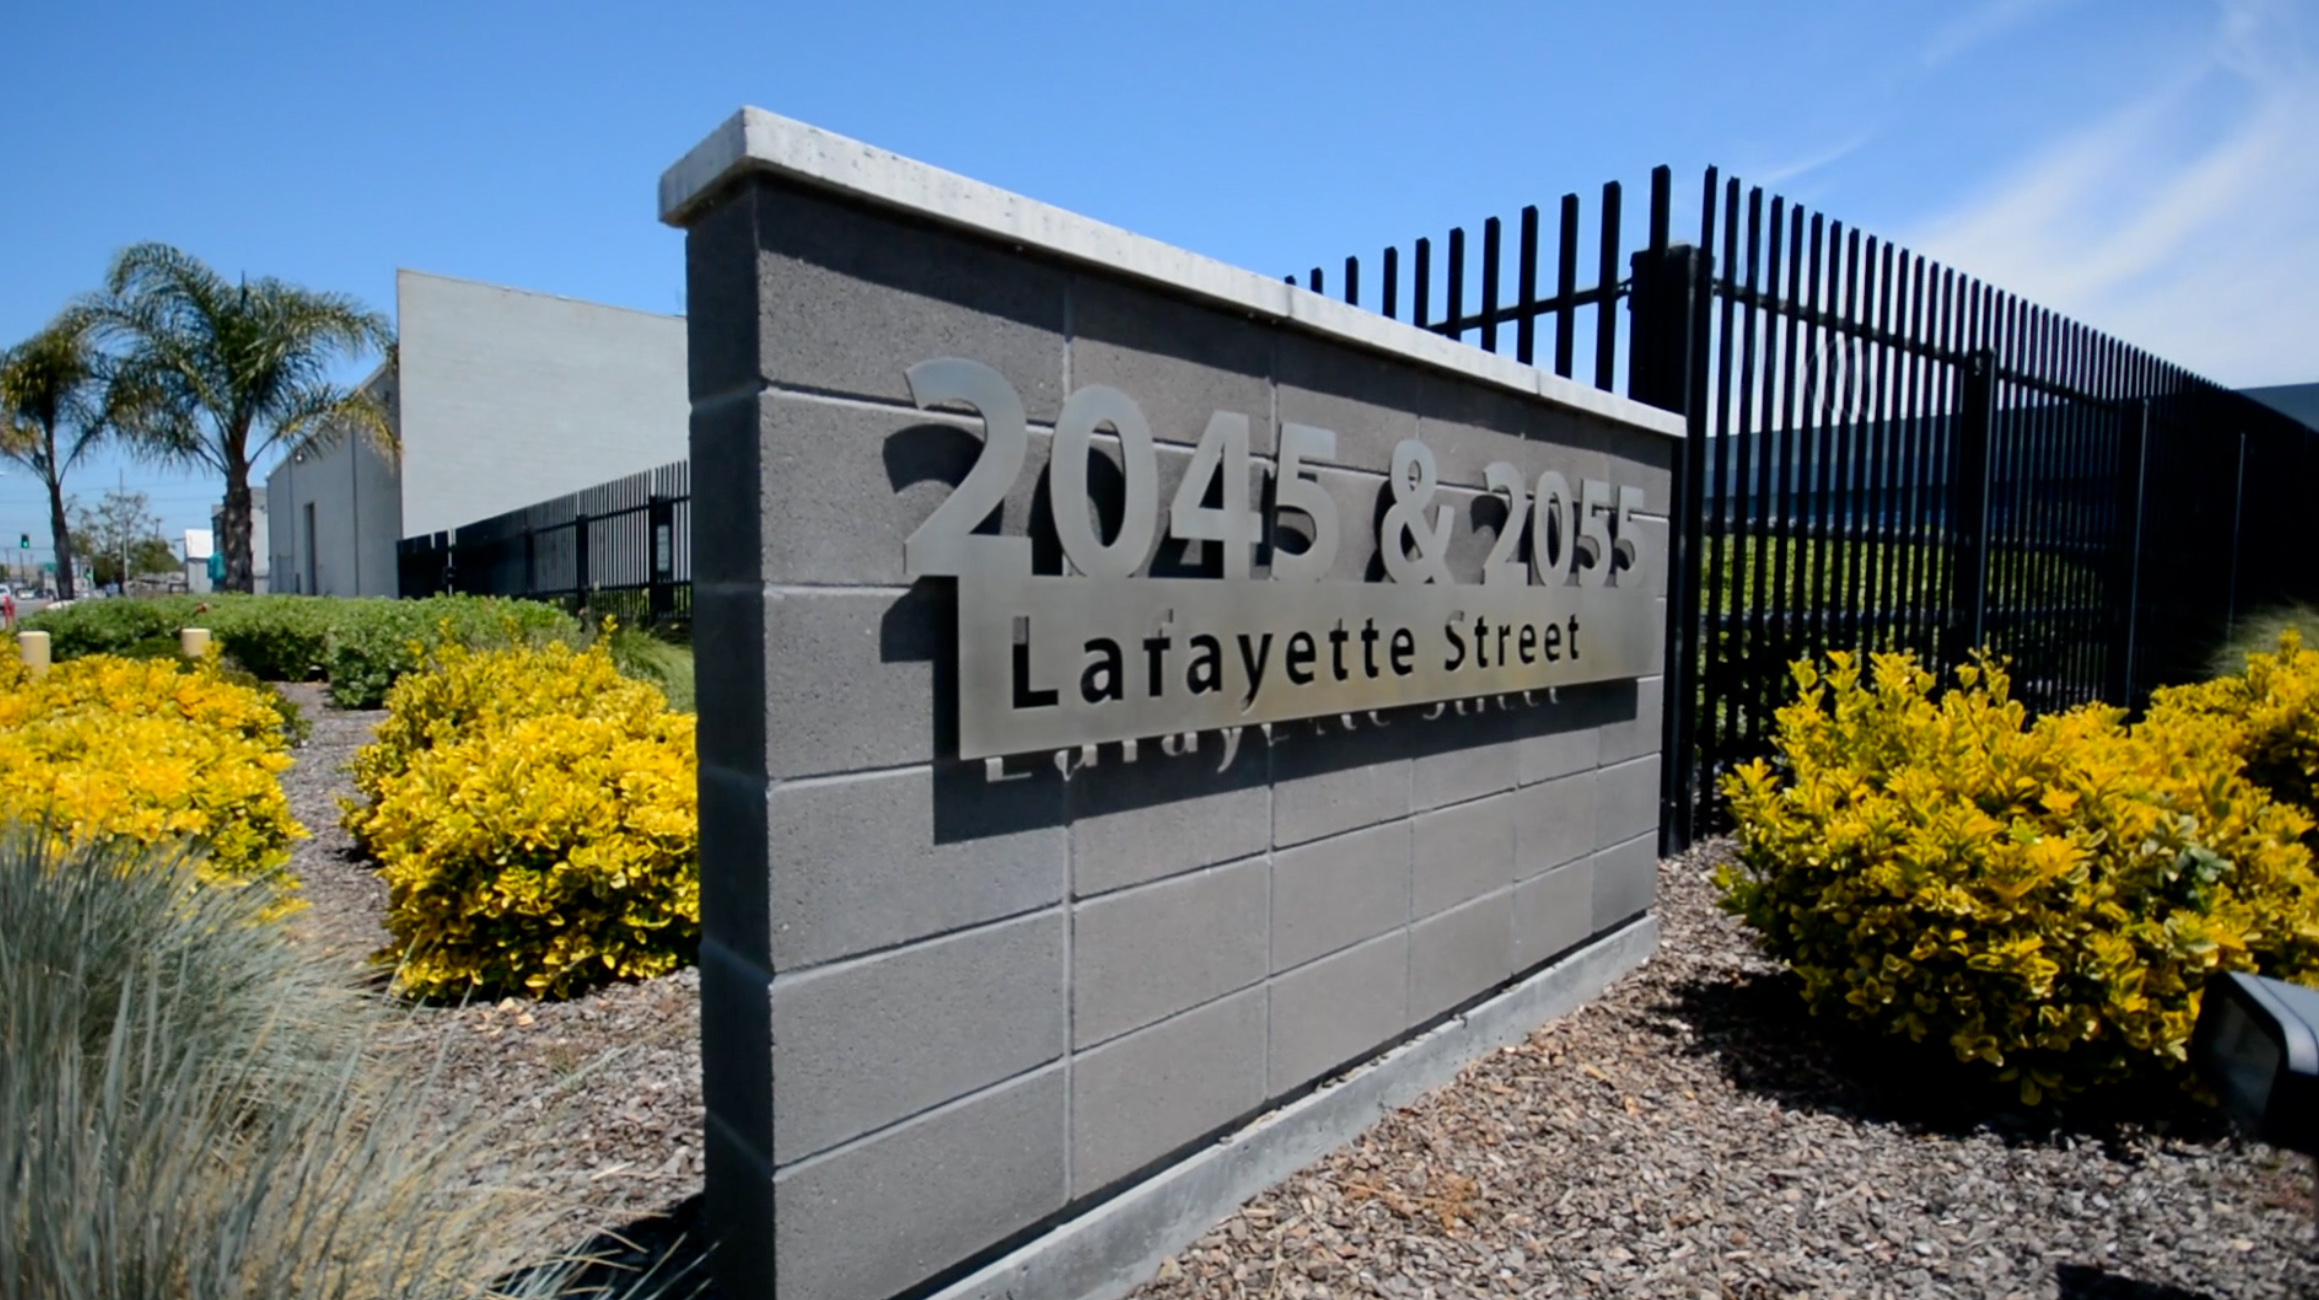 Street side sign at Lafayette Street